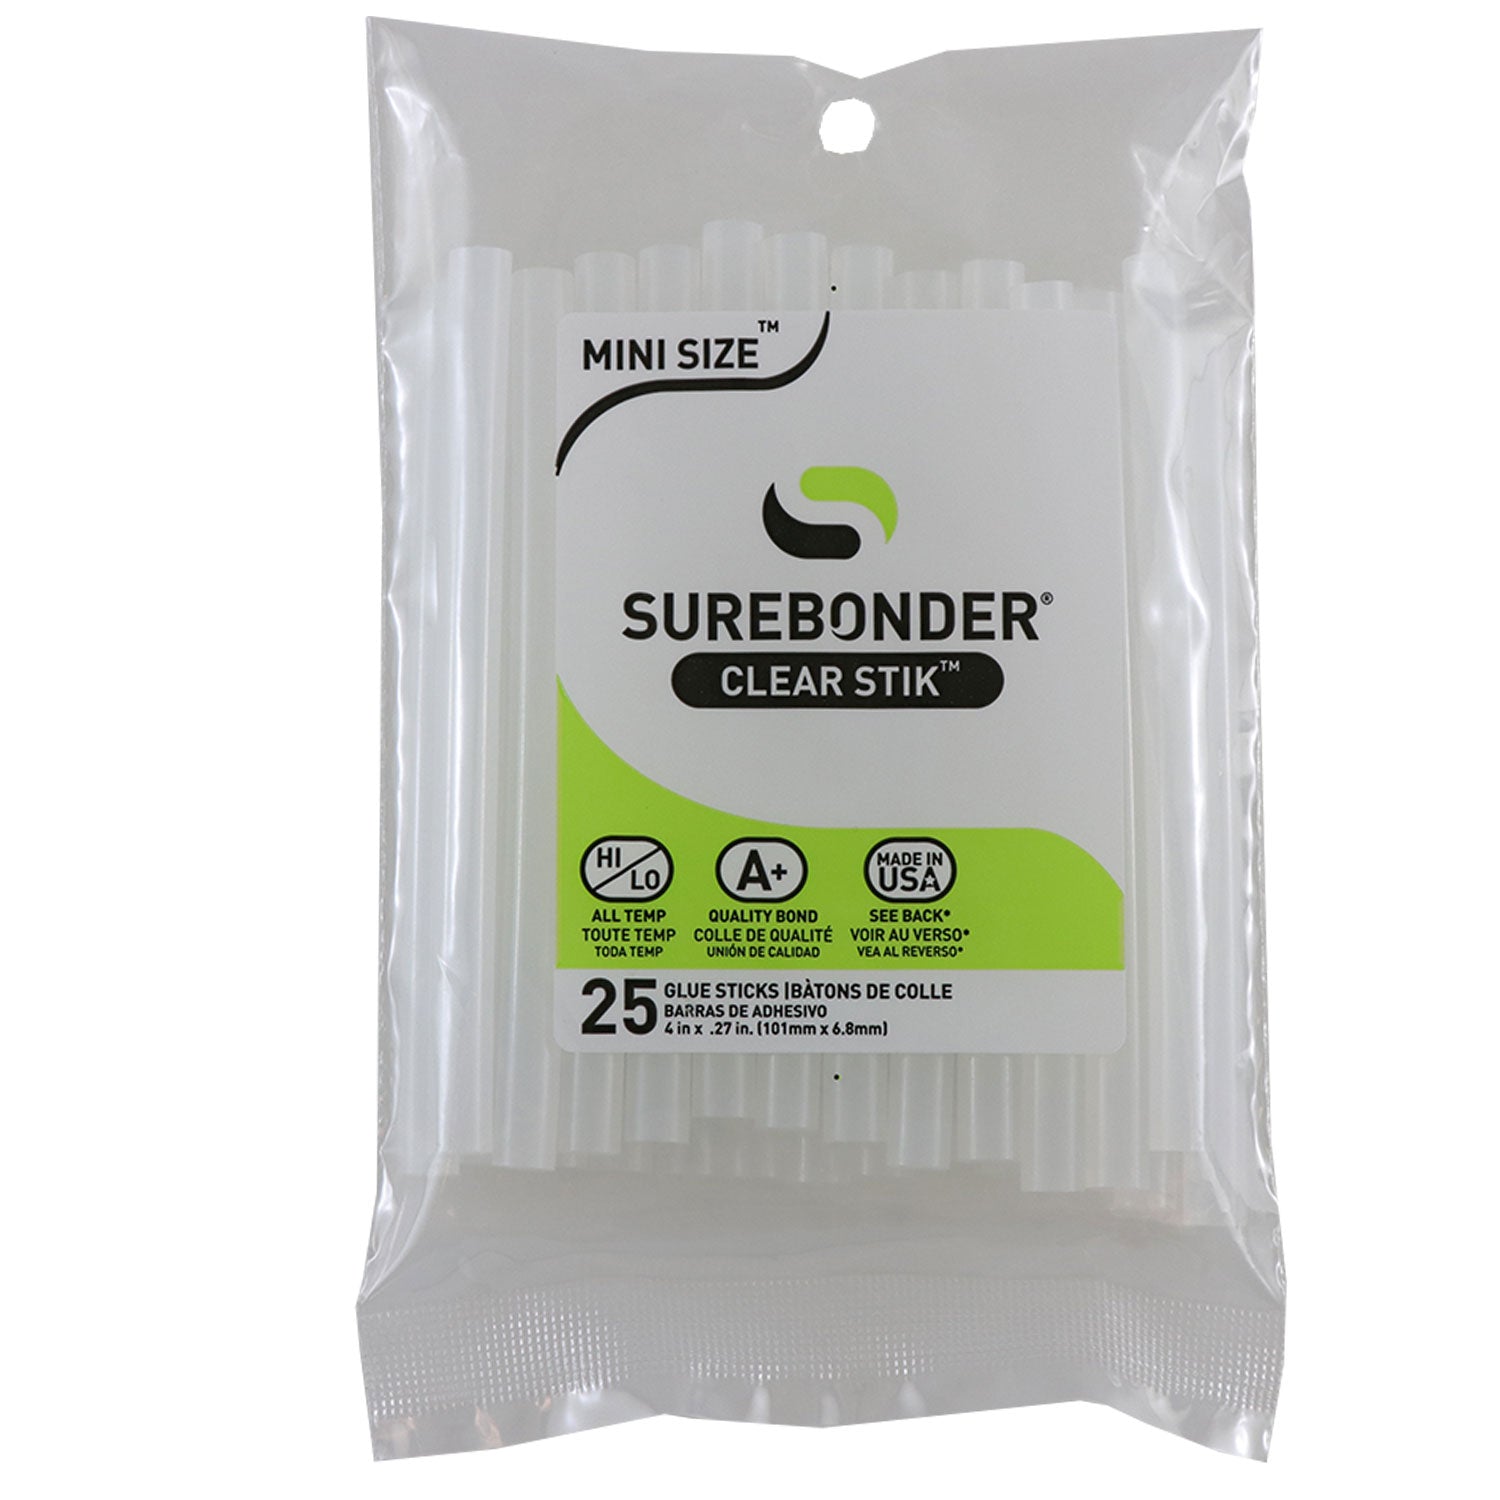  Surebonder Clear Stik Hot Glue Sticks for All Temperatures -  Mini Size 10 L, 5/16 D - 20 Pack - All Purpose, Made in USA (DT-20M10)